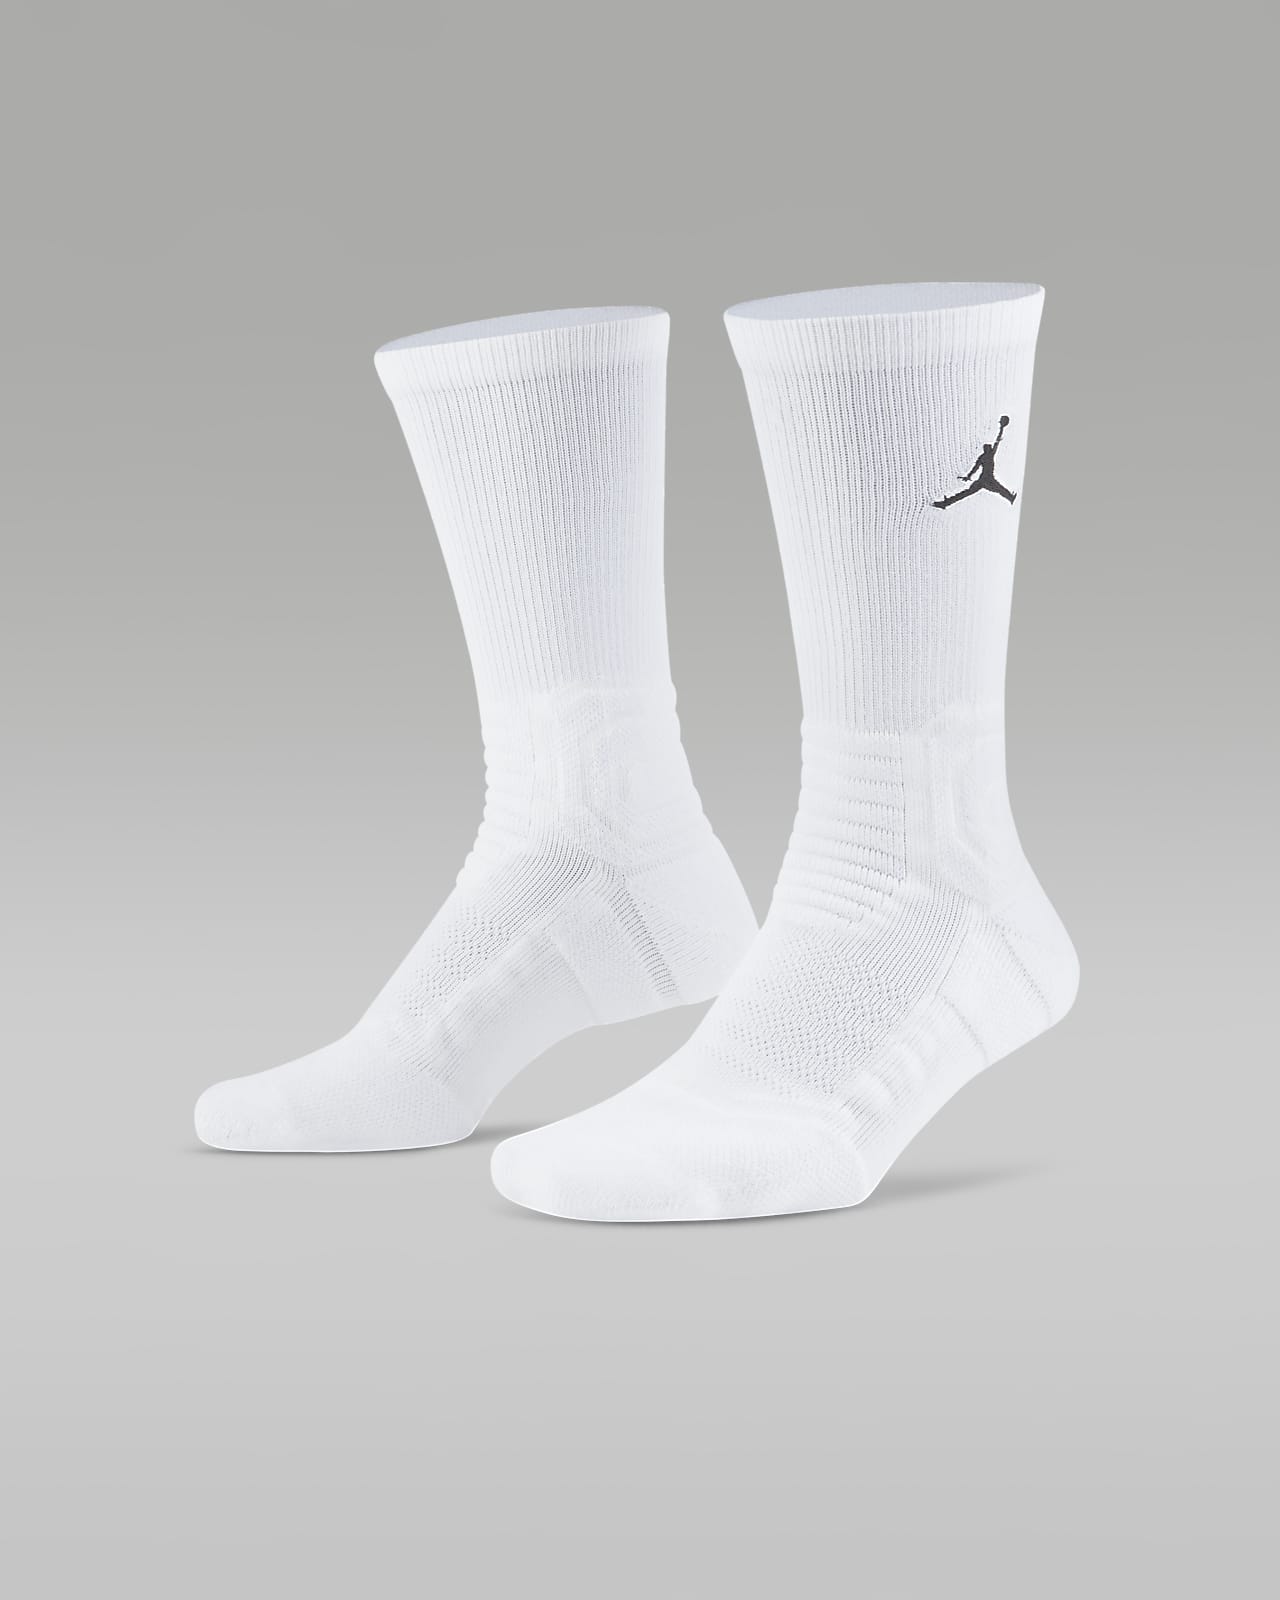 Jordan Flight Crew Basketball Socks